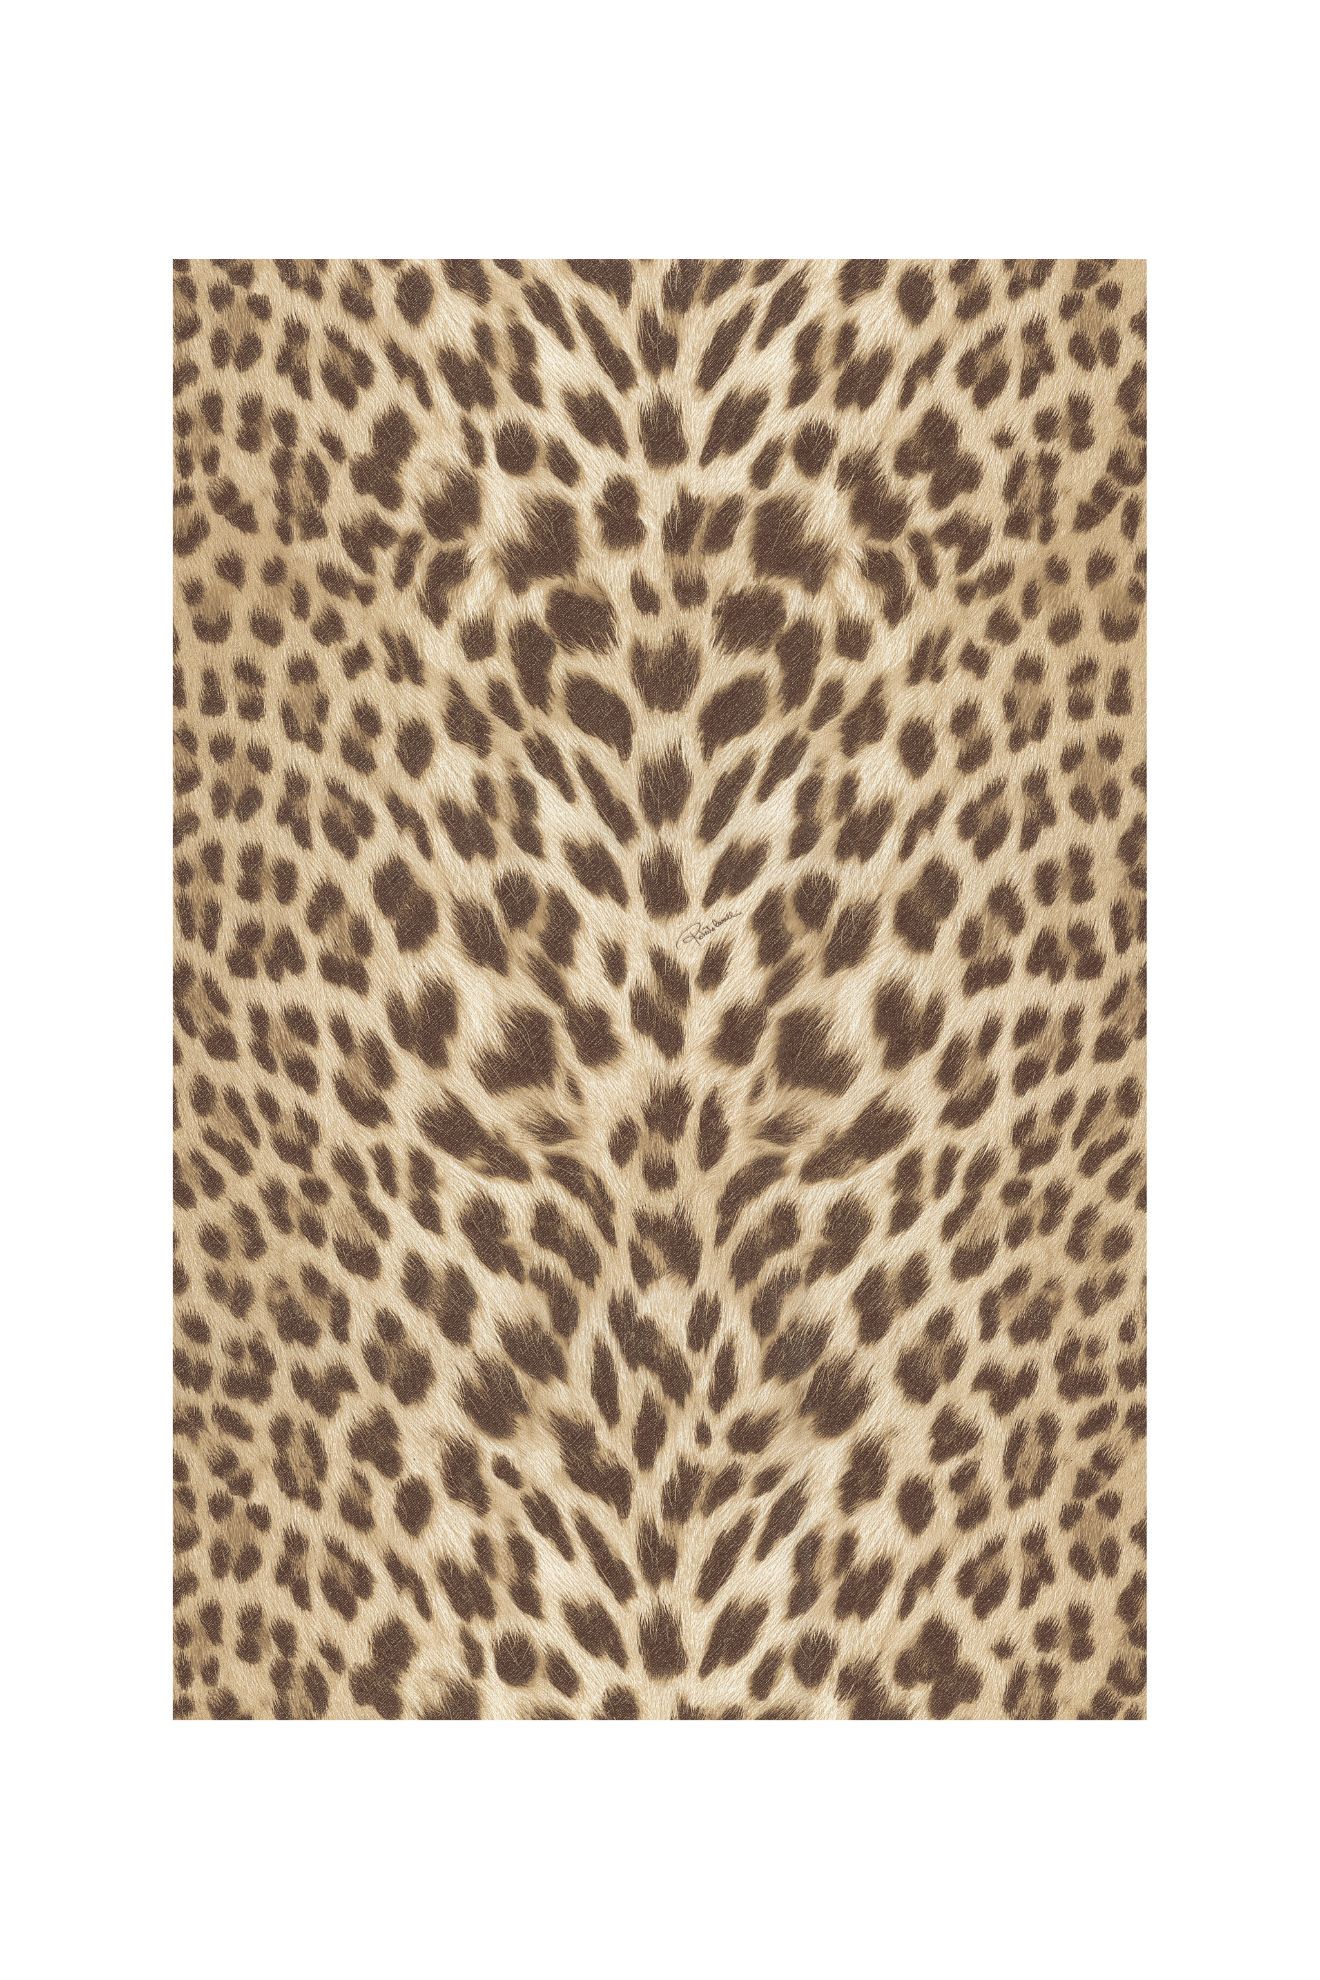 Leopard Skin Wallpapers - Wallpaper Cave